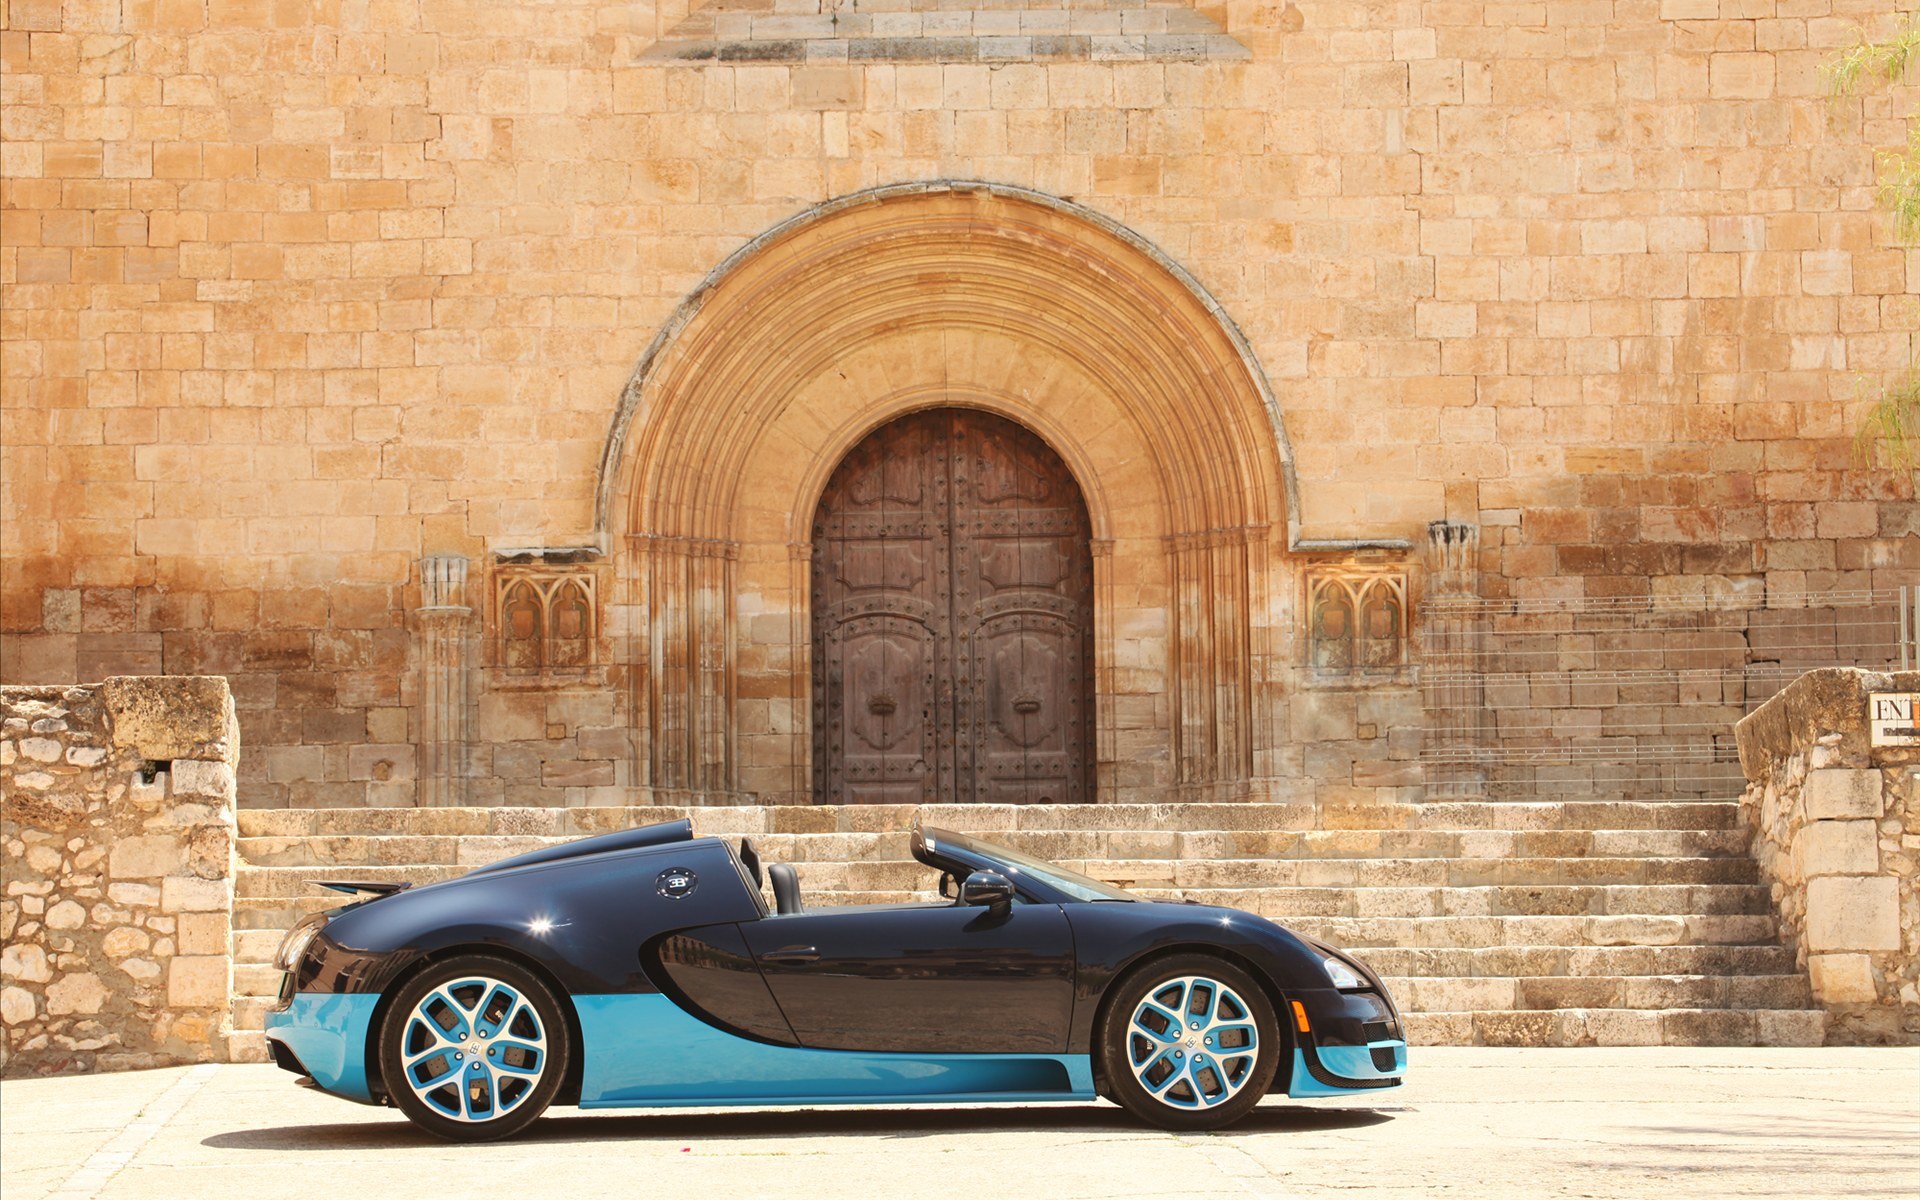 Best Bugatti Veyron wallpaper ID:297879 for High Resolution hd 1920x1200 desktop